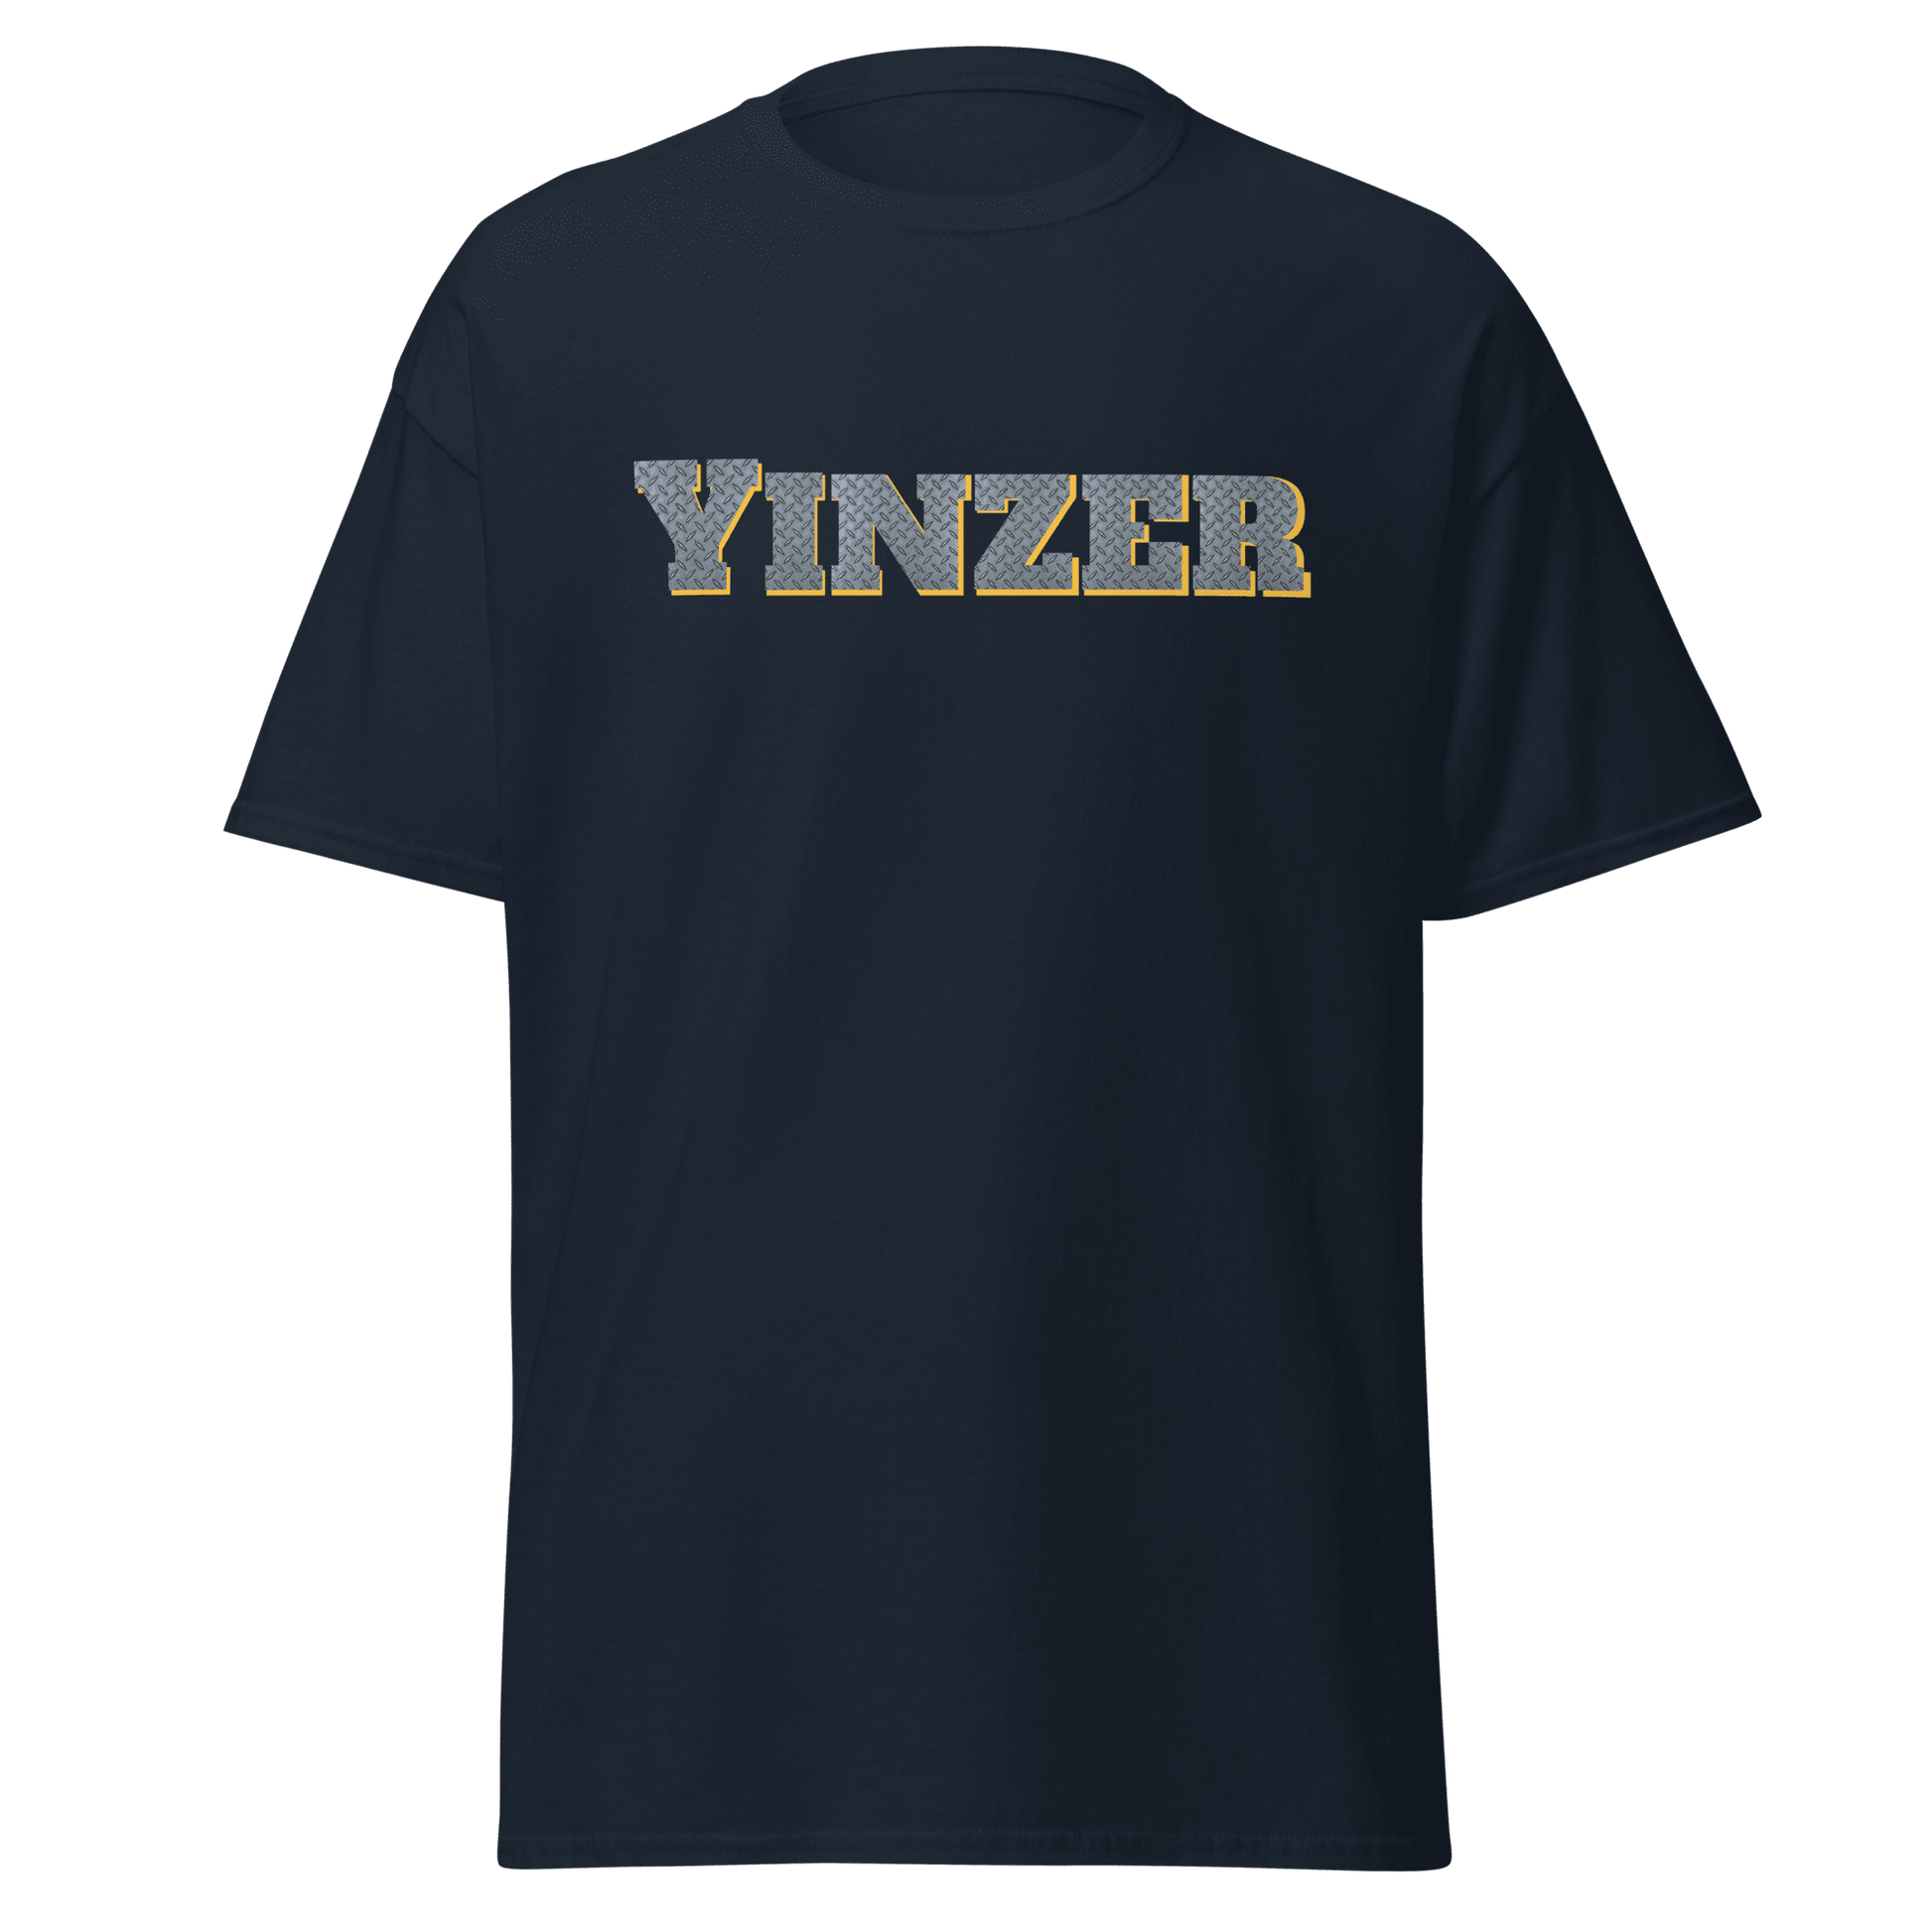 Steel Yinzer T-Shirt - Burgh Proud Yinzergear Navy S 